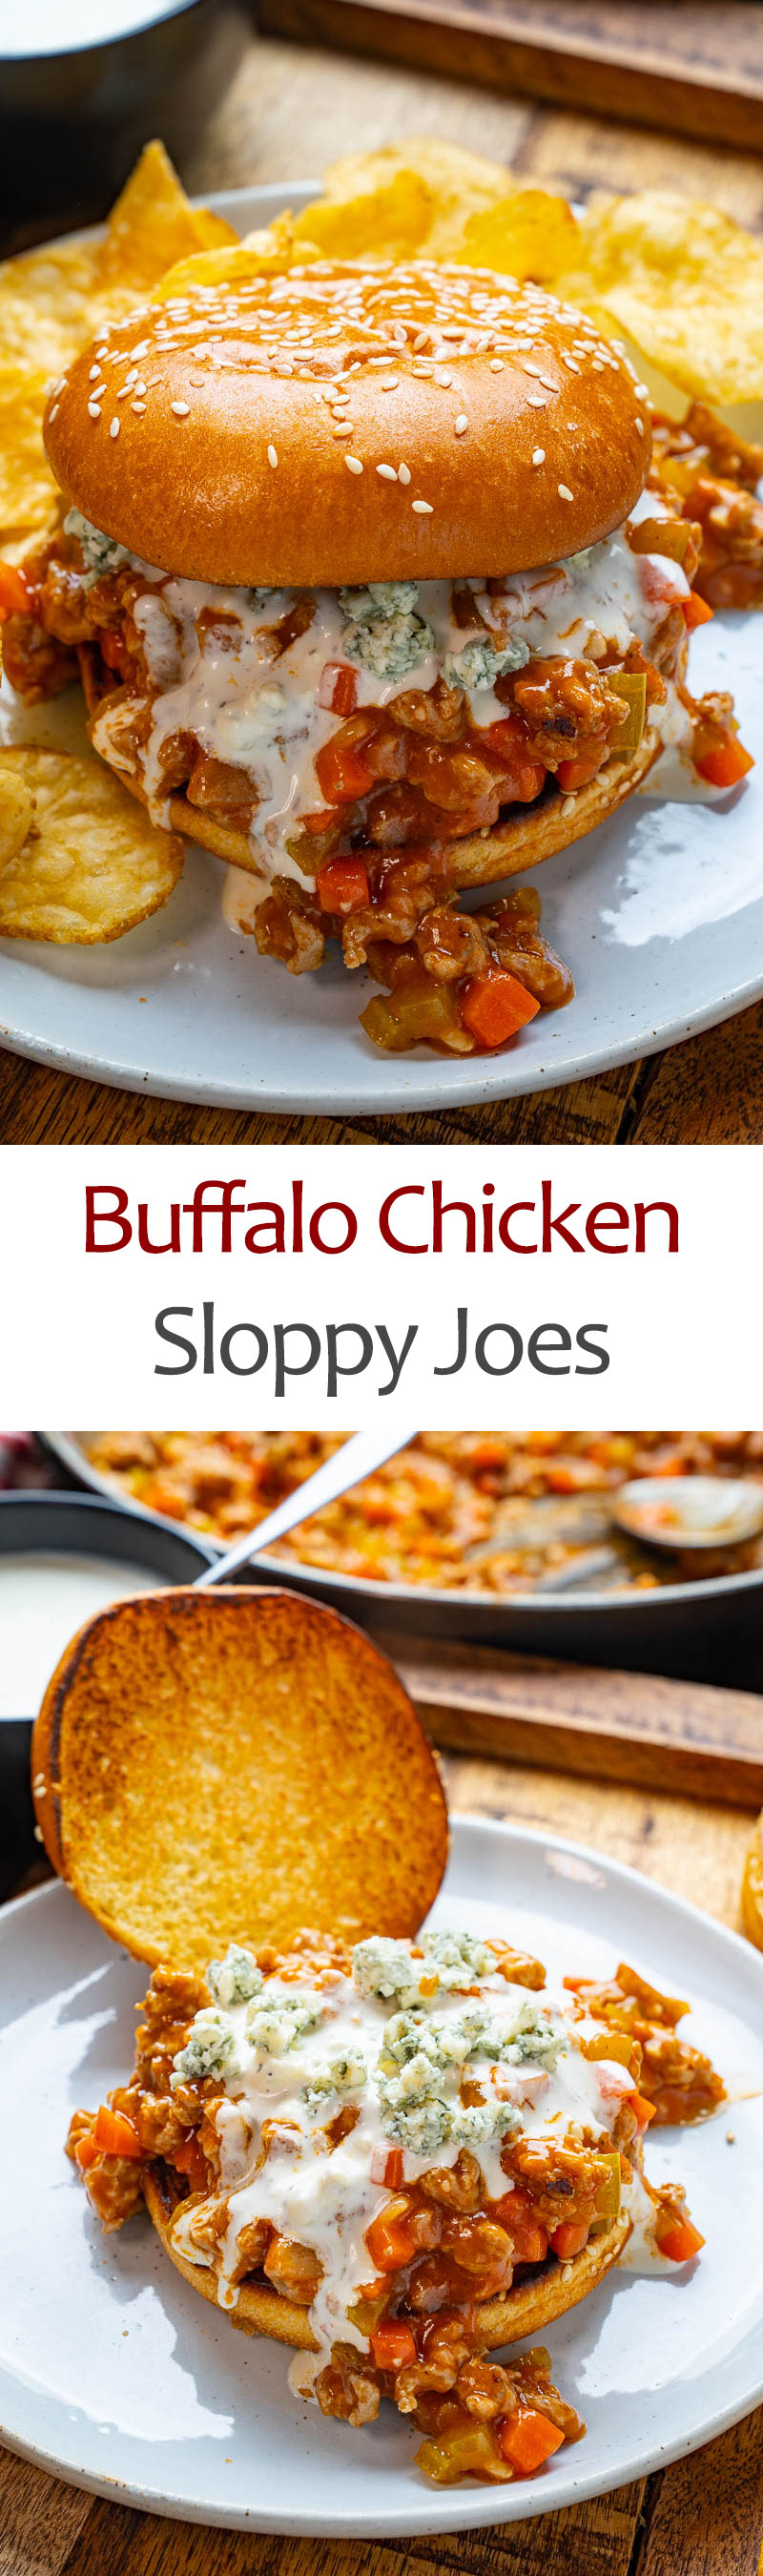 Buffalo Chicken Sloppy Joes - Closet Cooking